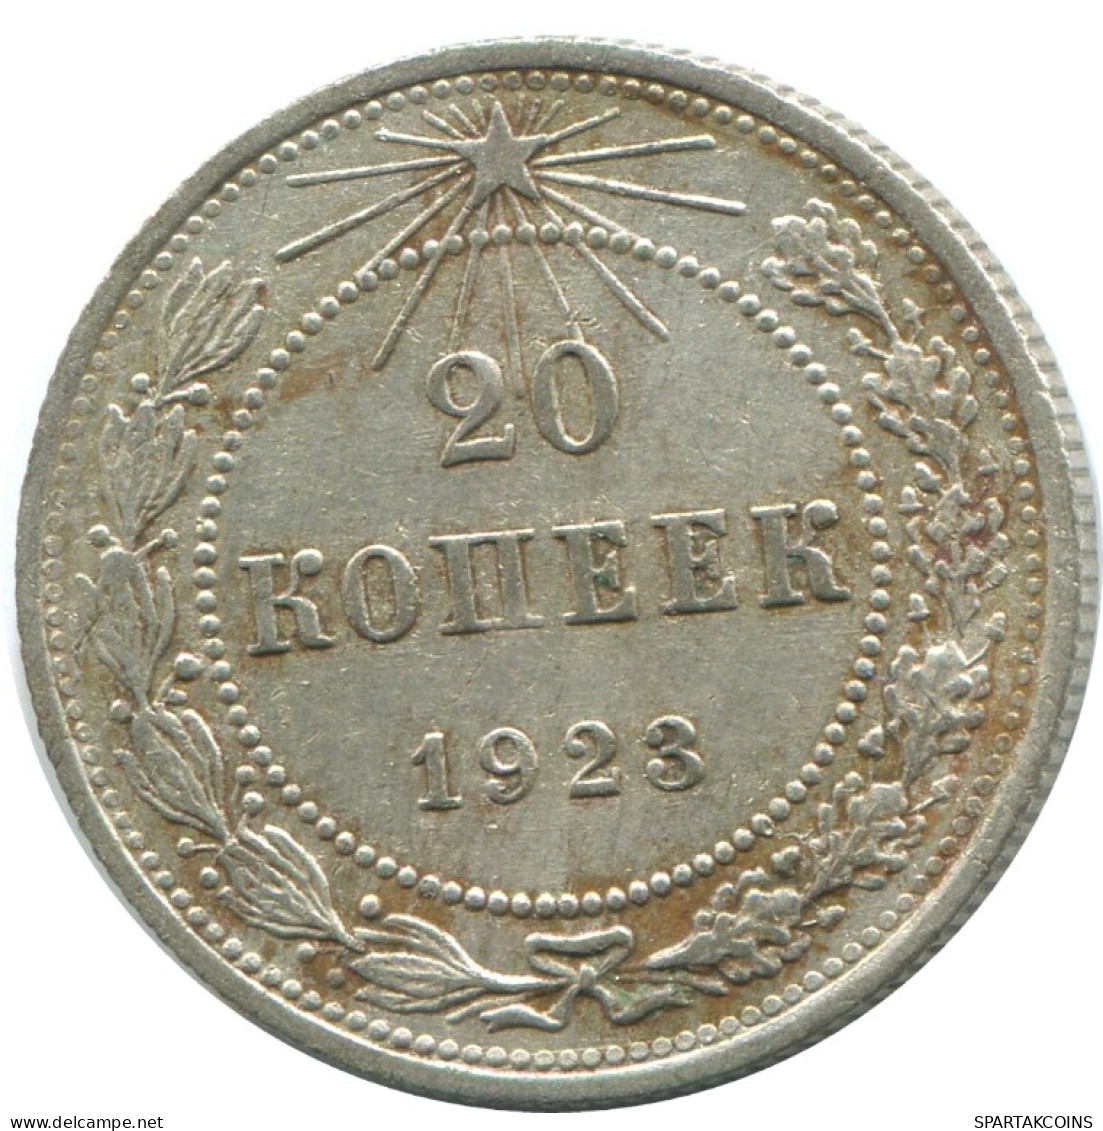 20 KOPEKS 1923 RUSSIA RSFSR SILVER Coin HIGH GRADE #AF542.4.U.A - Russia